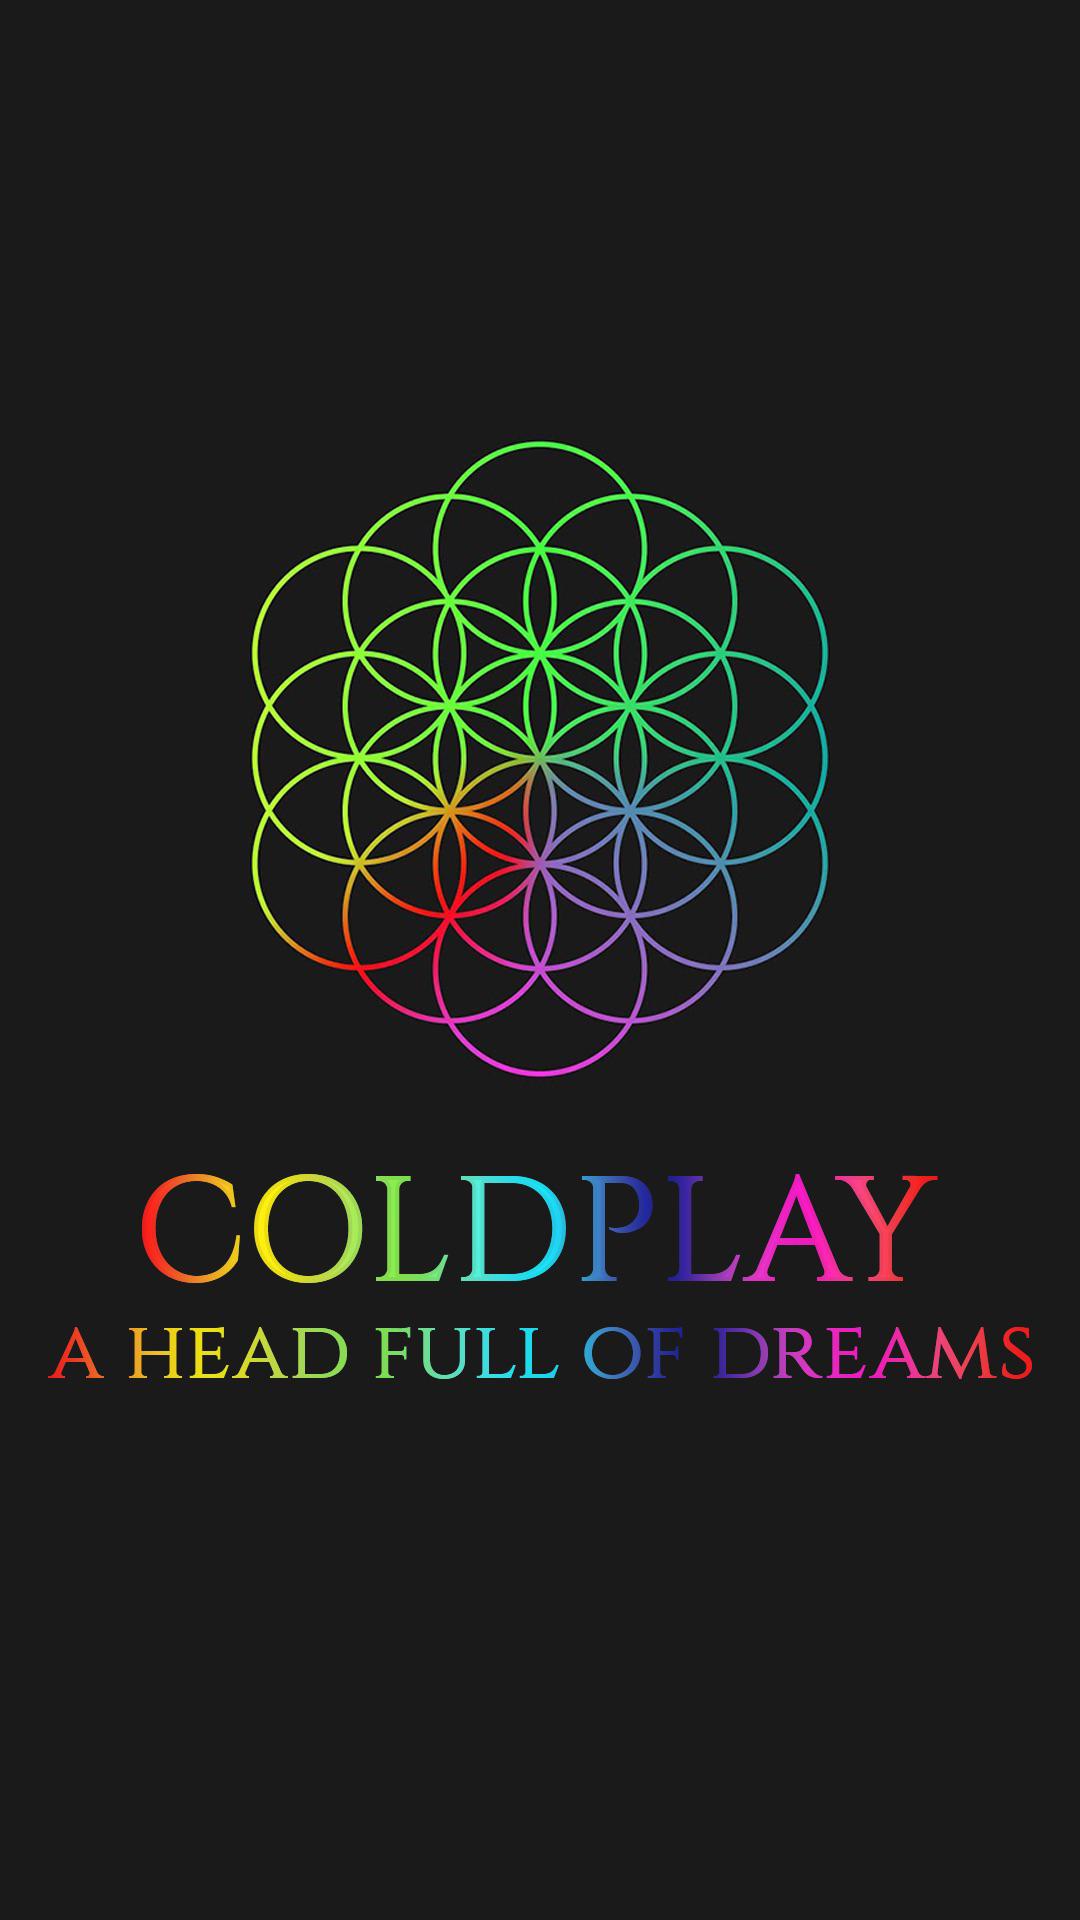 Fondos de pantalla de Coldplay - FondosMil